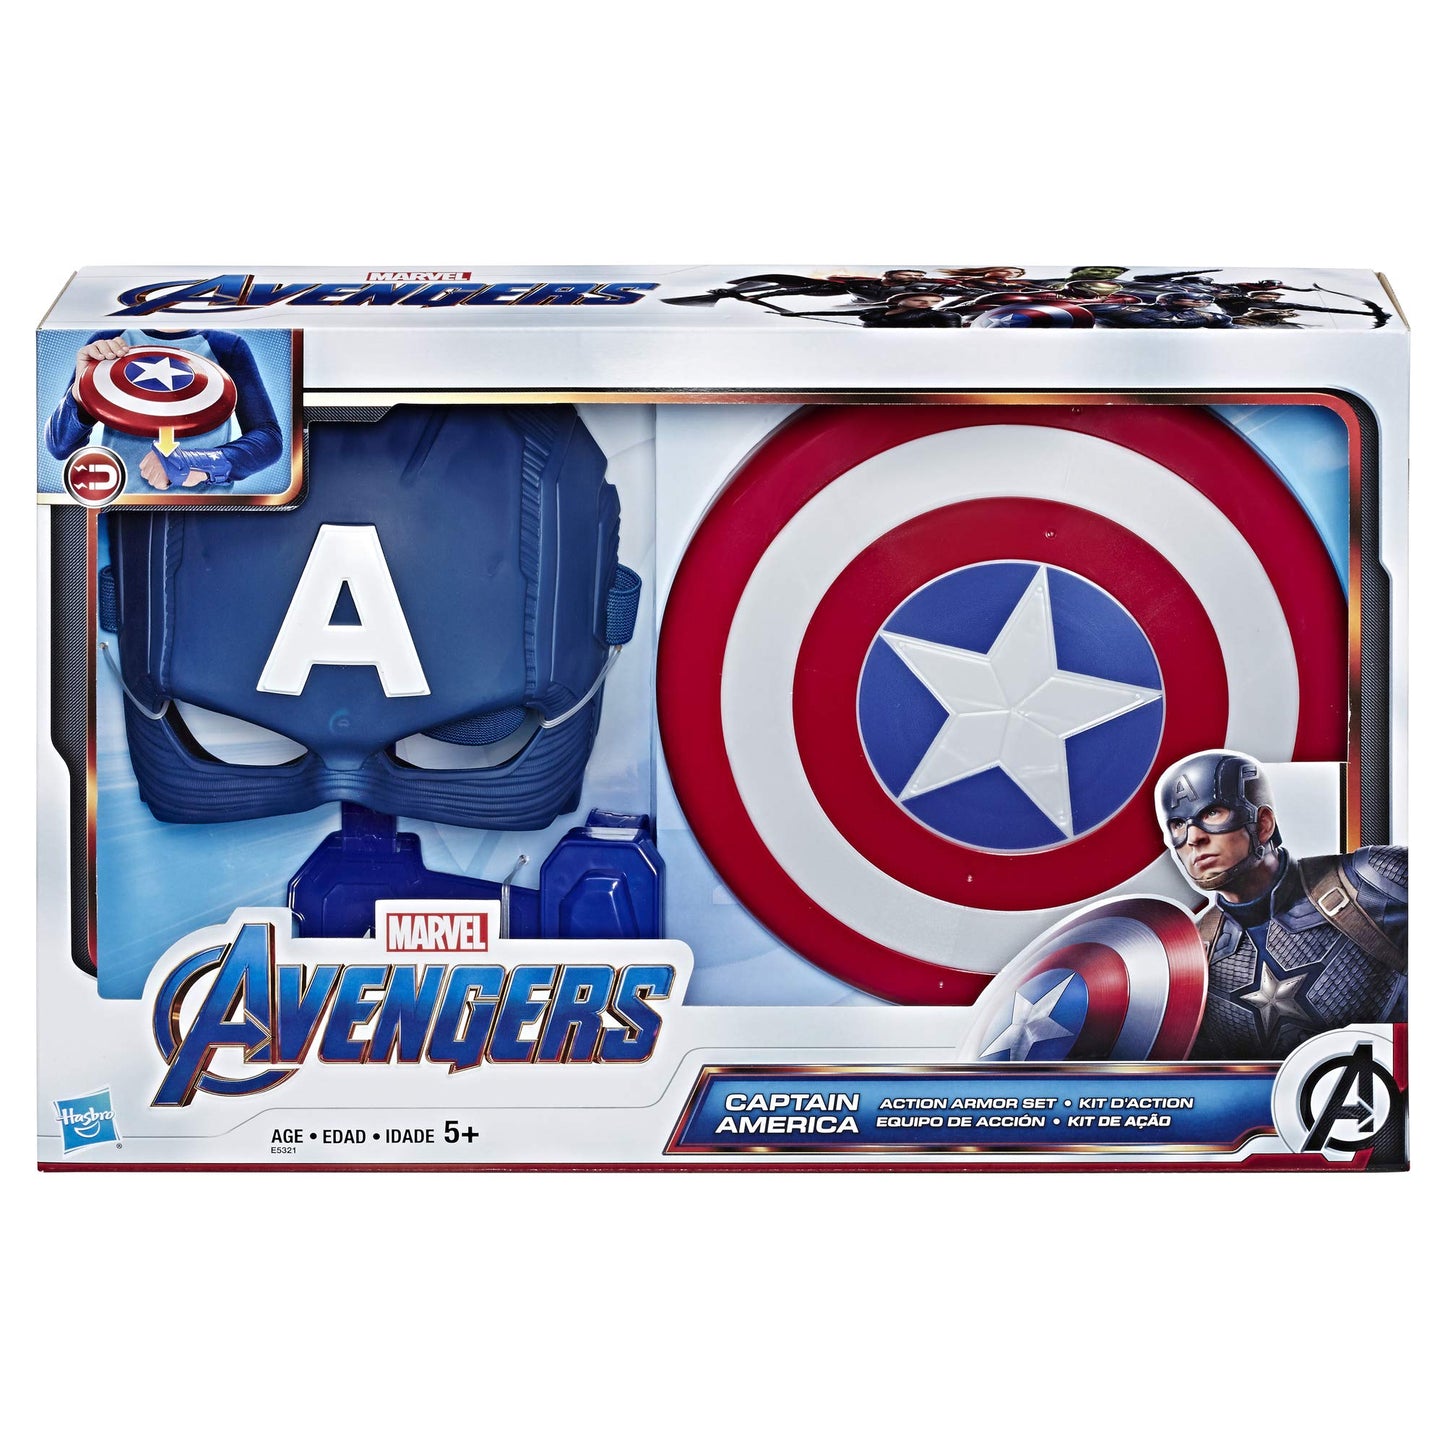 Captain America Action Armor Set